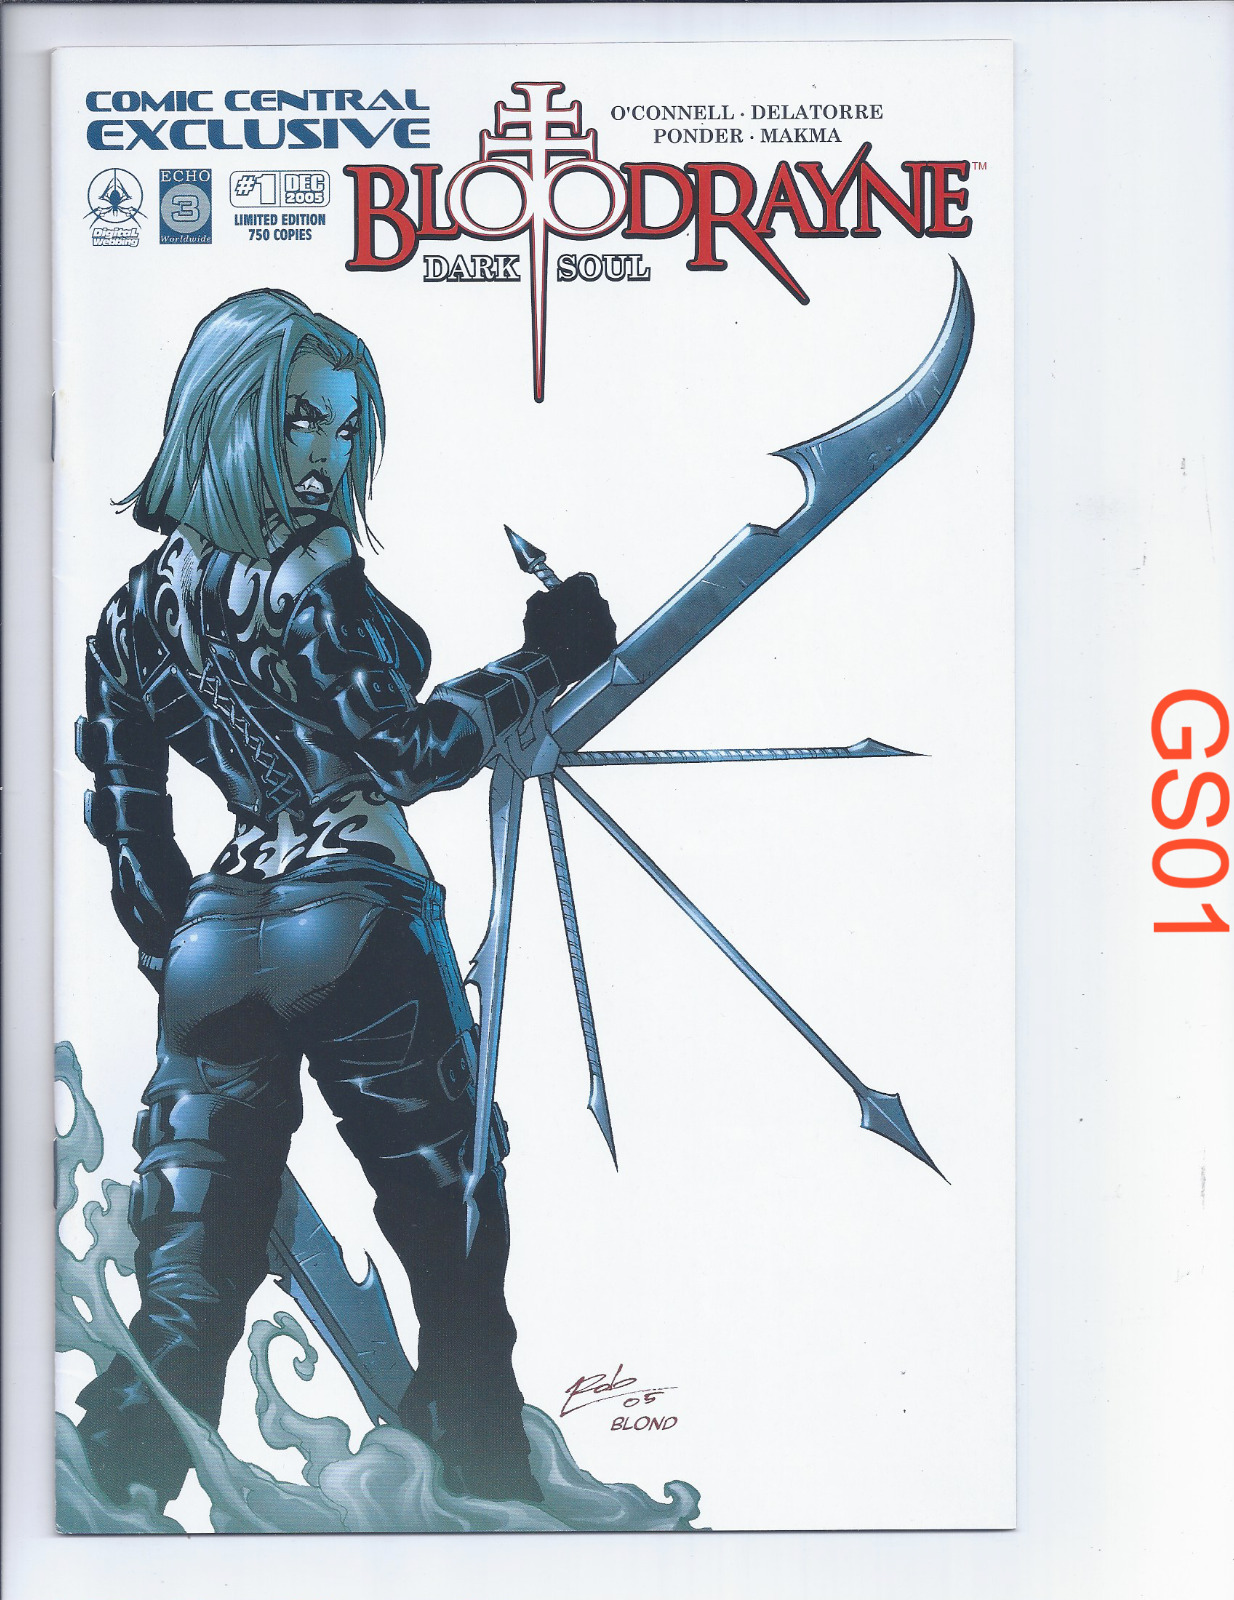 Bloodrayne Dark Soul Comic Central variant ltd 750 2005 Digital Webbing VF/NM